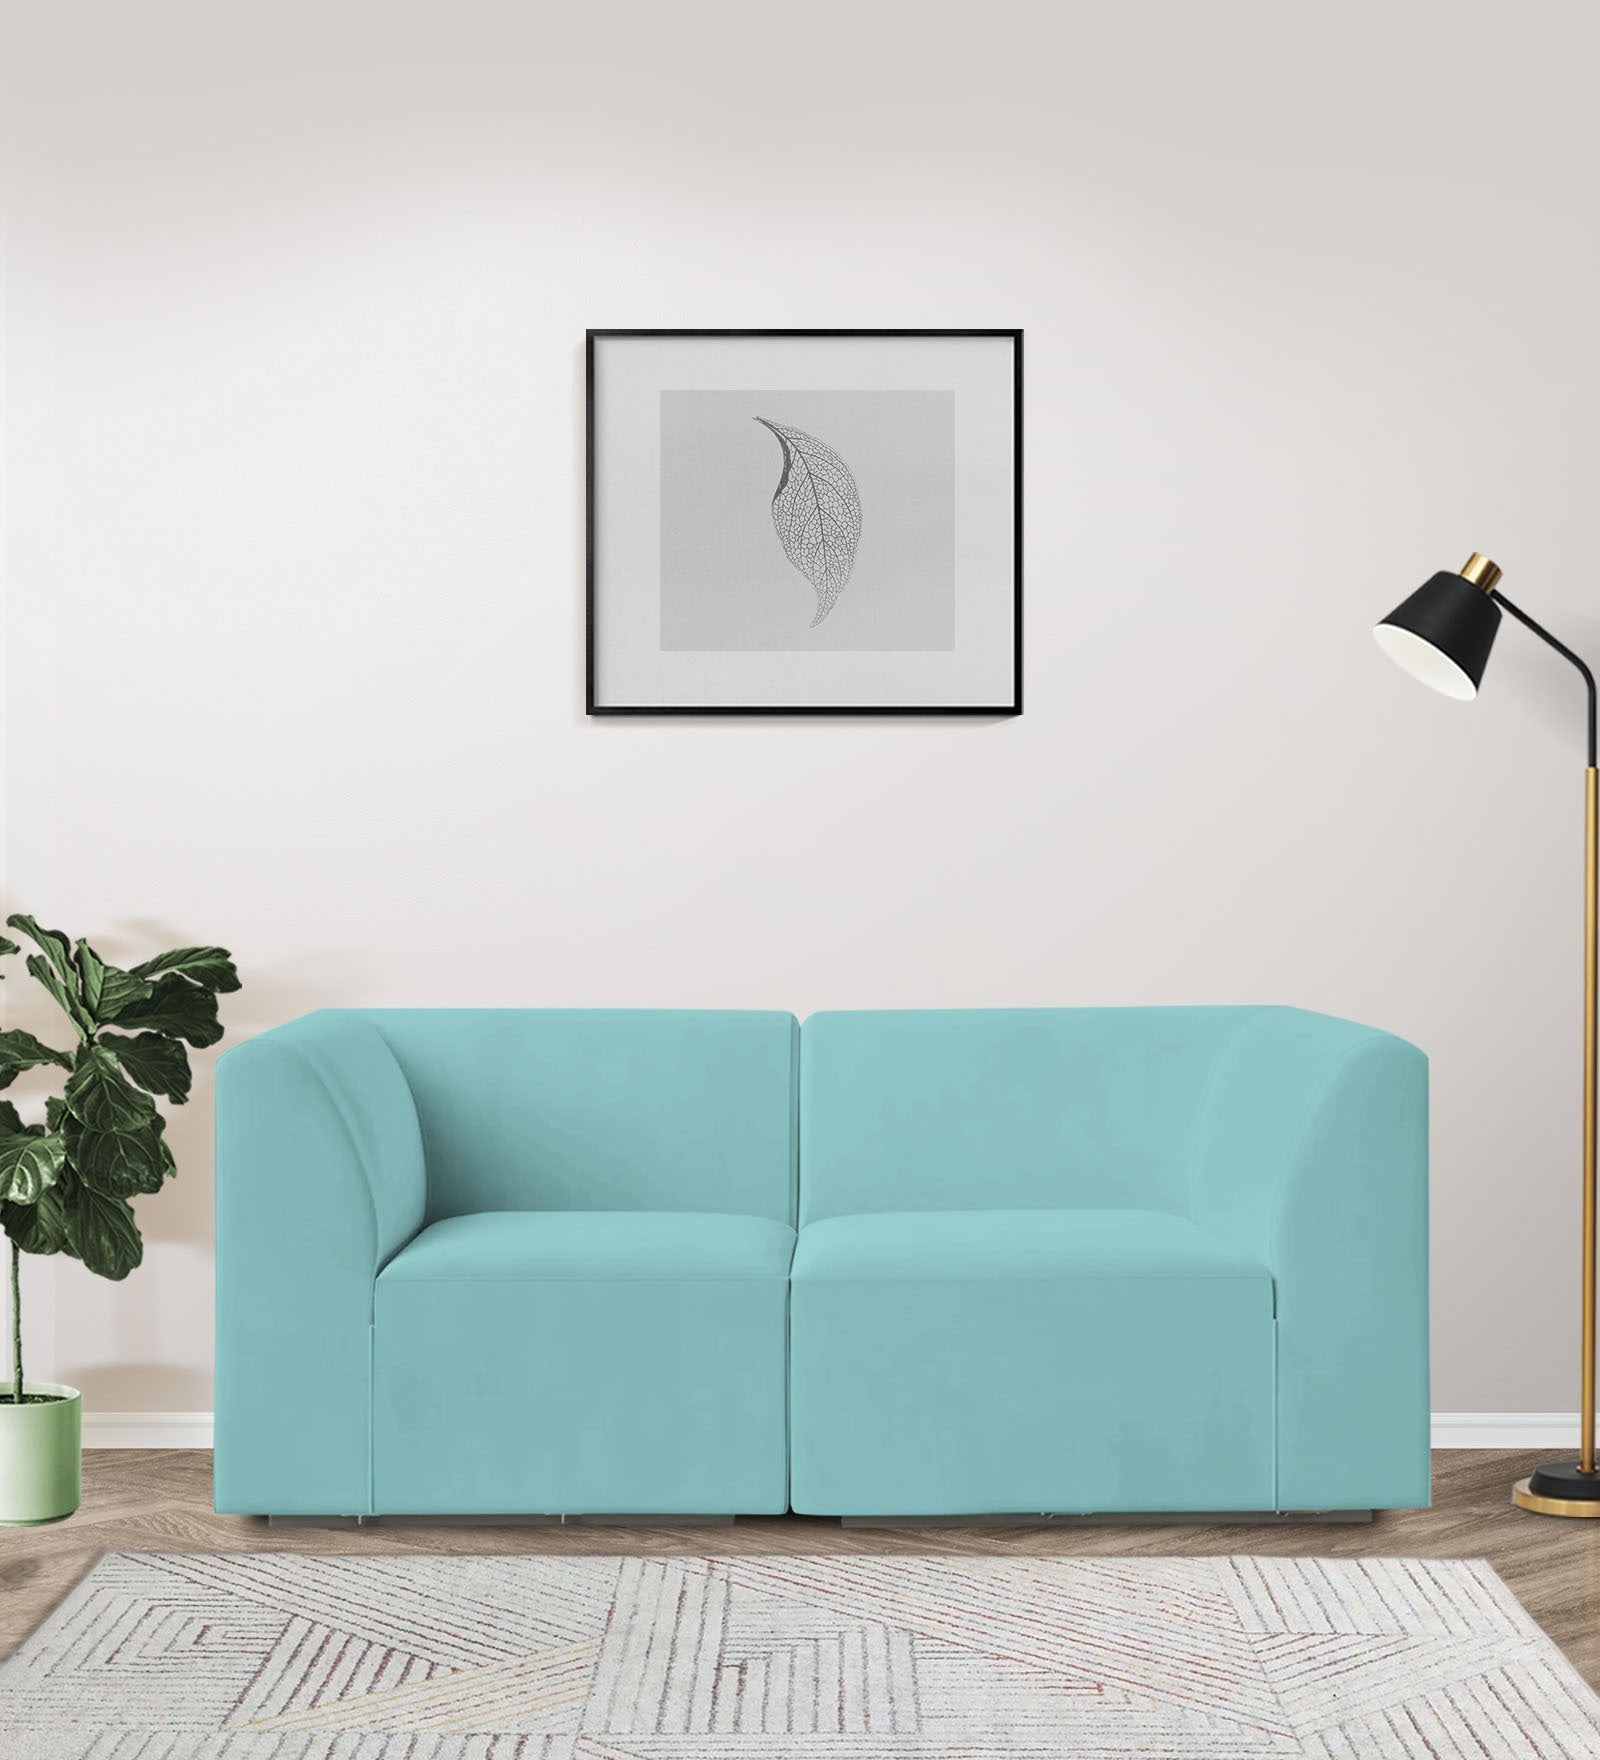 Bufa Velvet 2 Seater Sofa in Aqua blue Colour With Storage